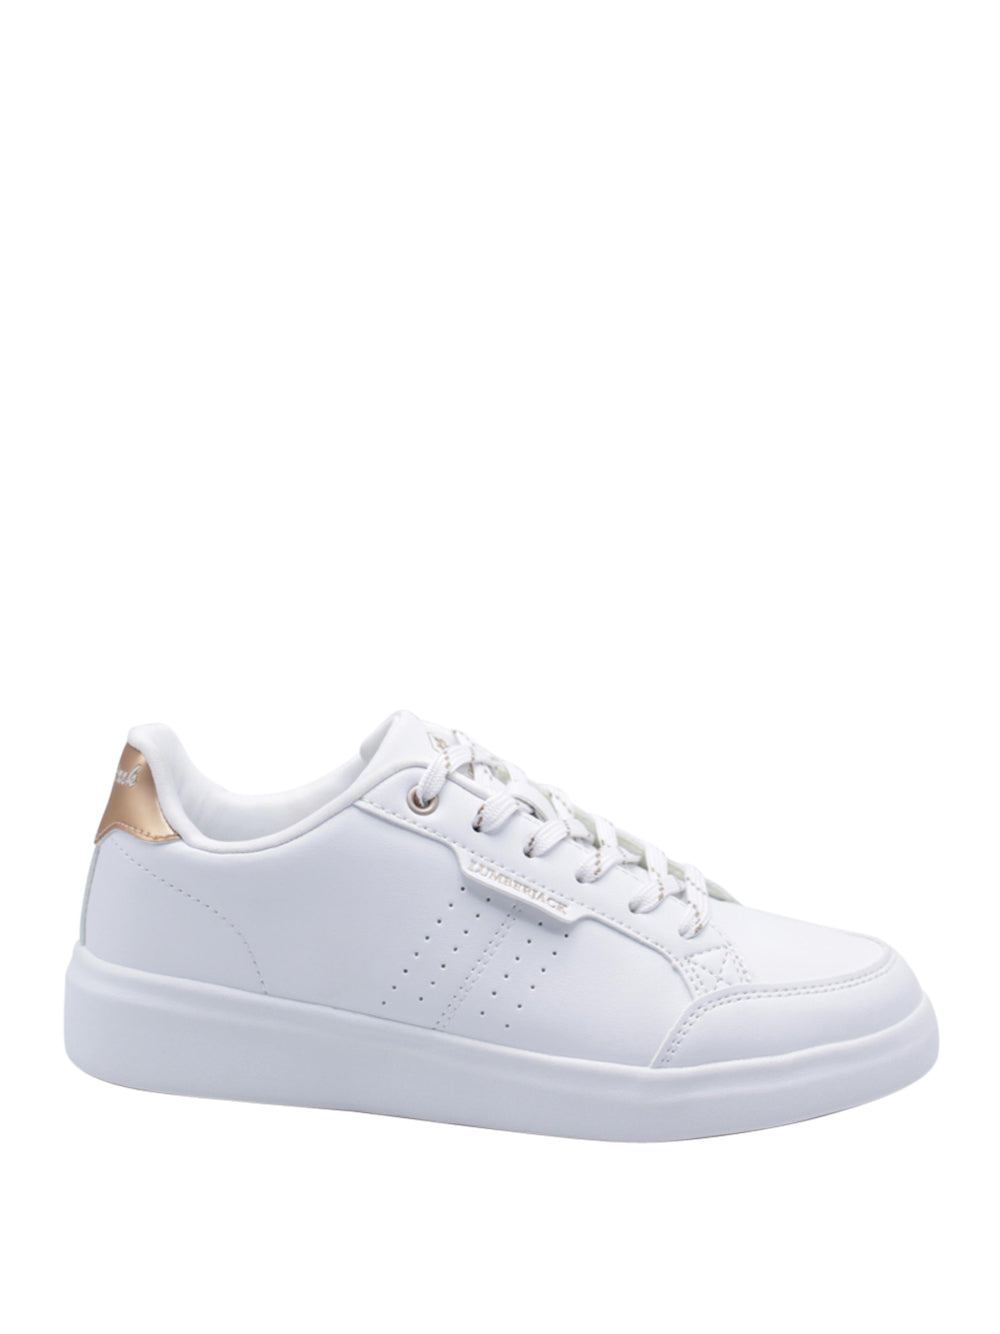 LUMBERJACK Sneakers Donna - Bianco modello SW71411-005